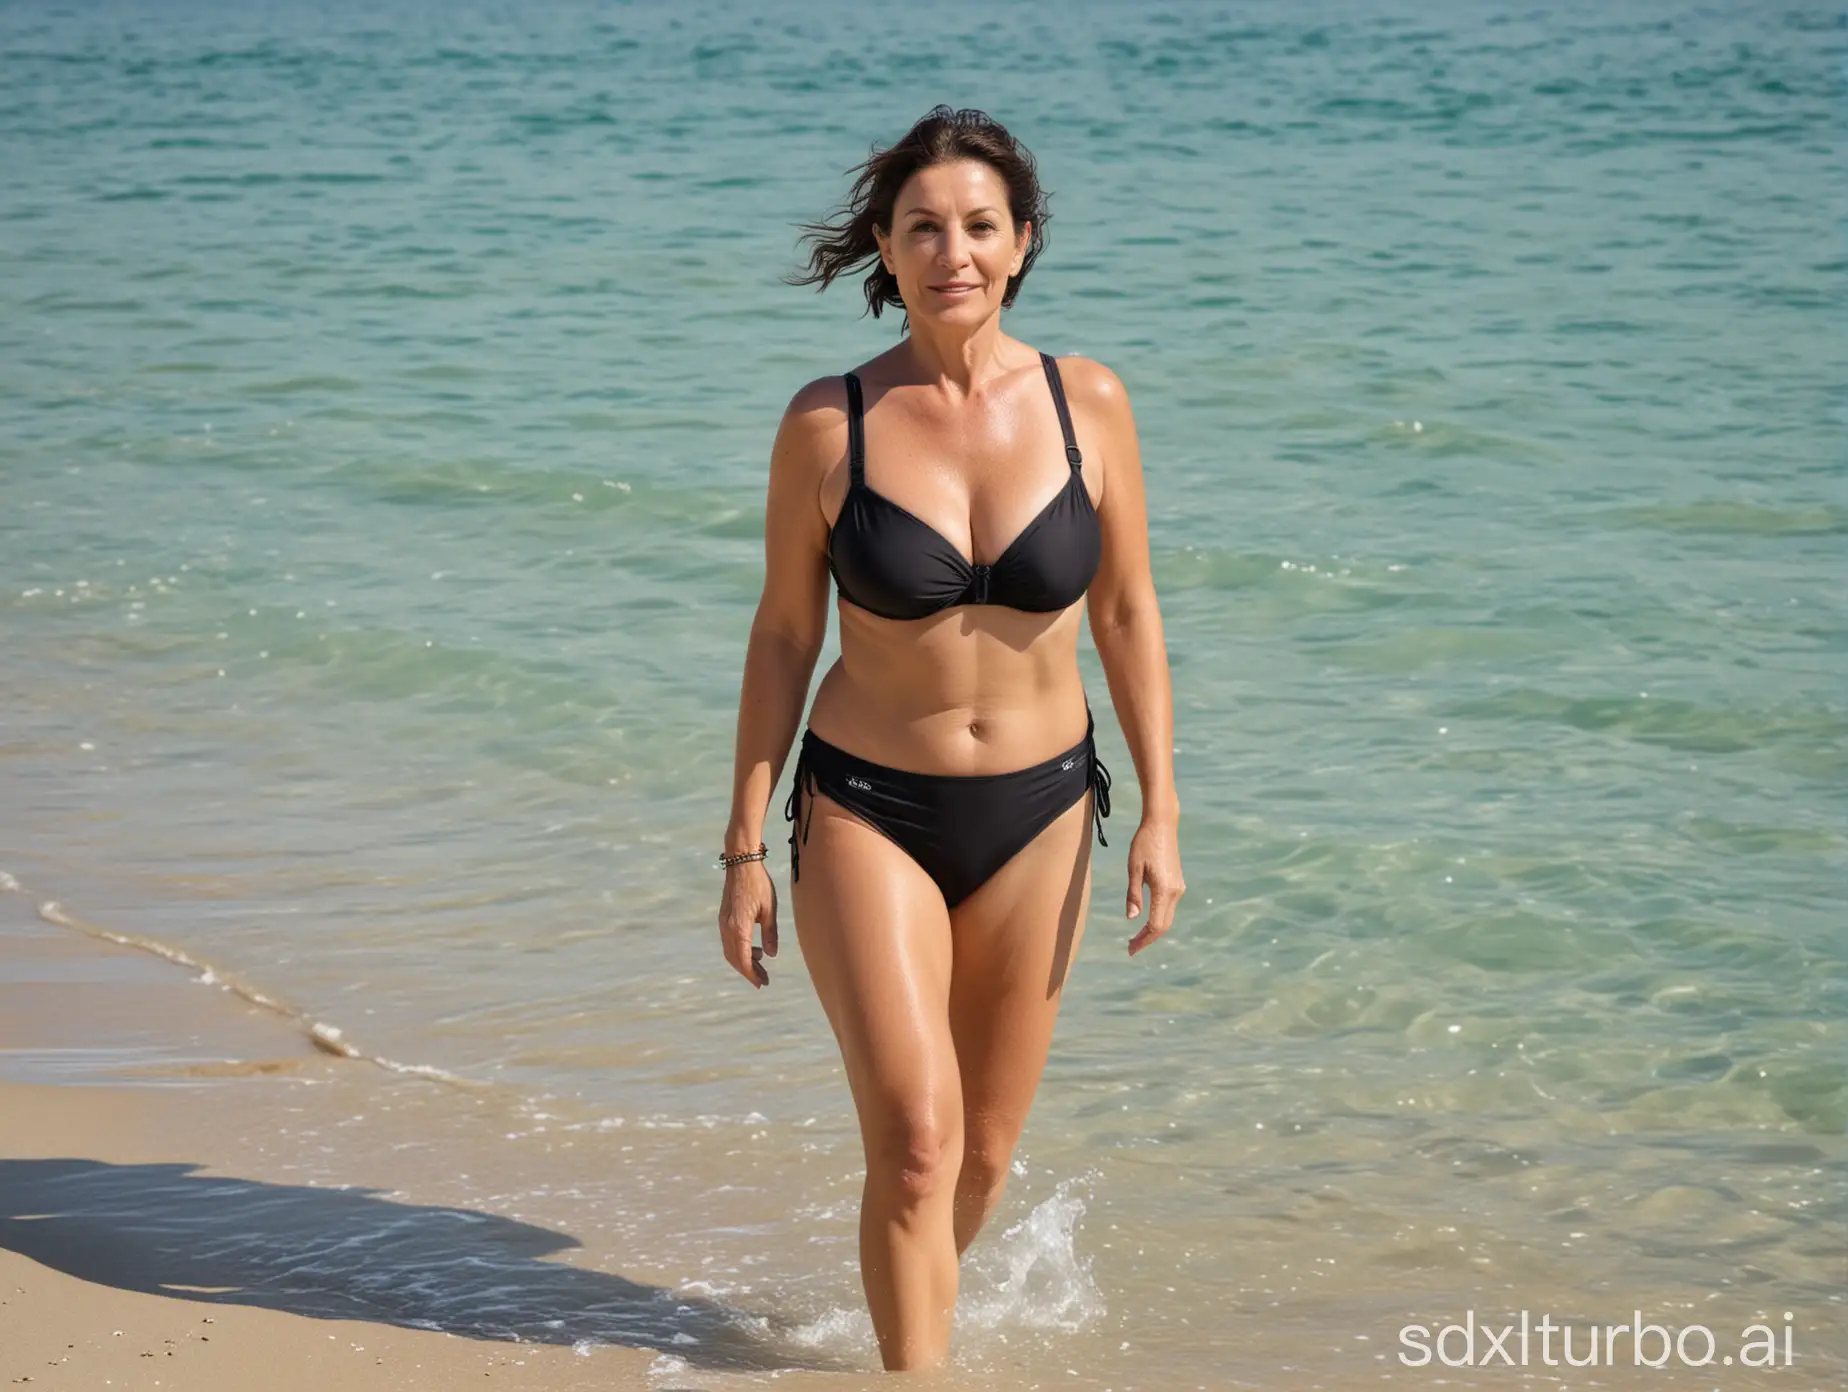 Italian-Mature-Woman-Age-55-Strolls-Along-Beach-in-Swimwear